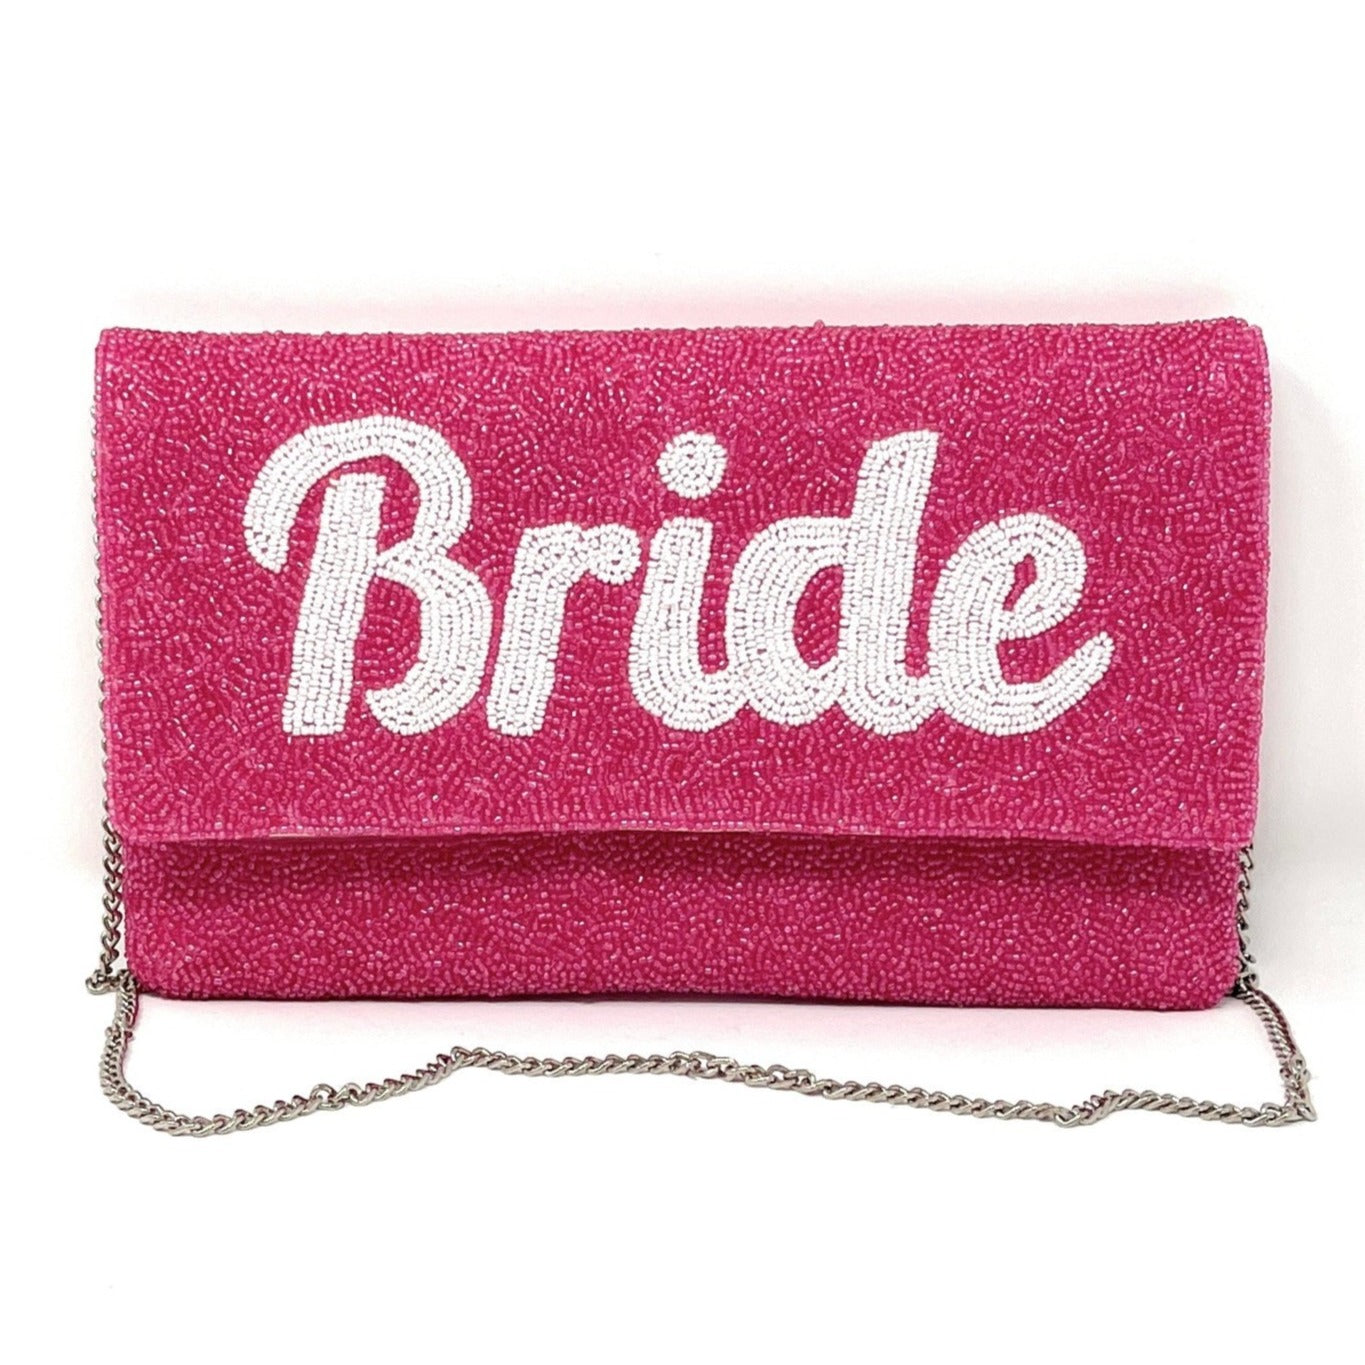 Beaded Bridal Clutch Bag